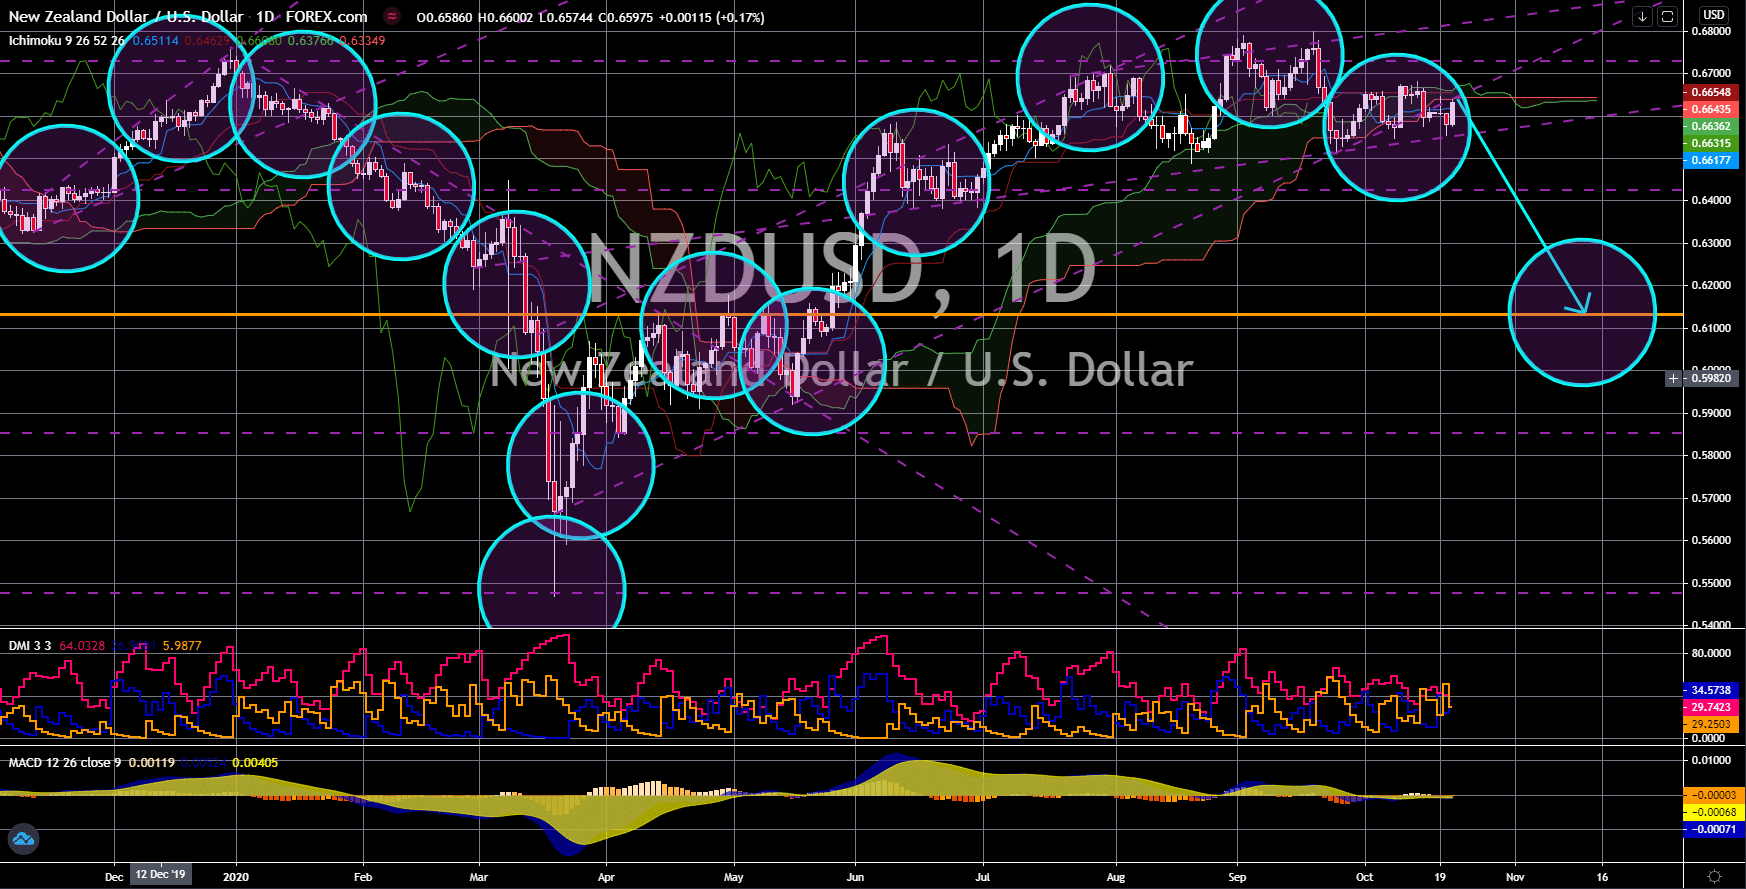 FinanceBrokerage - Market News: NZD/USD Chart